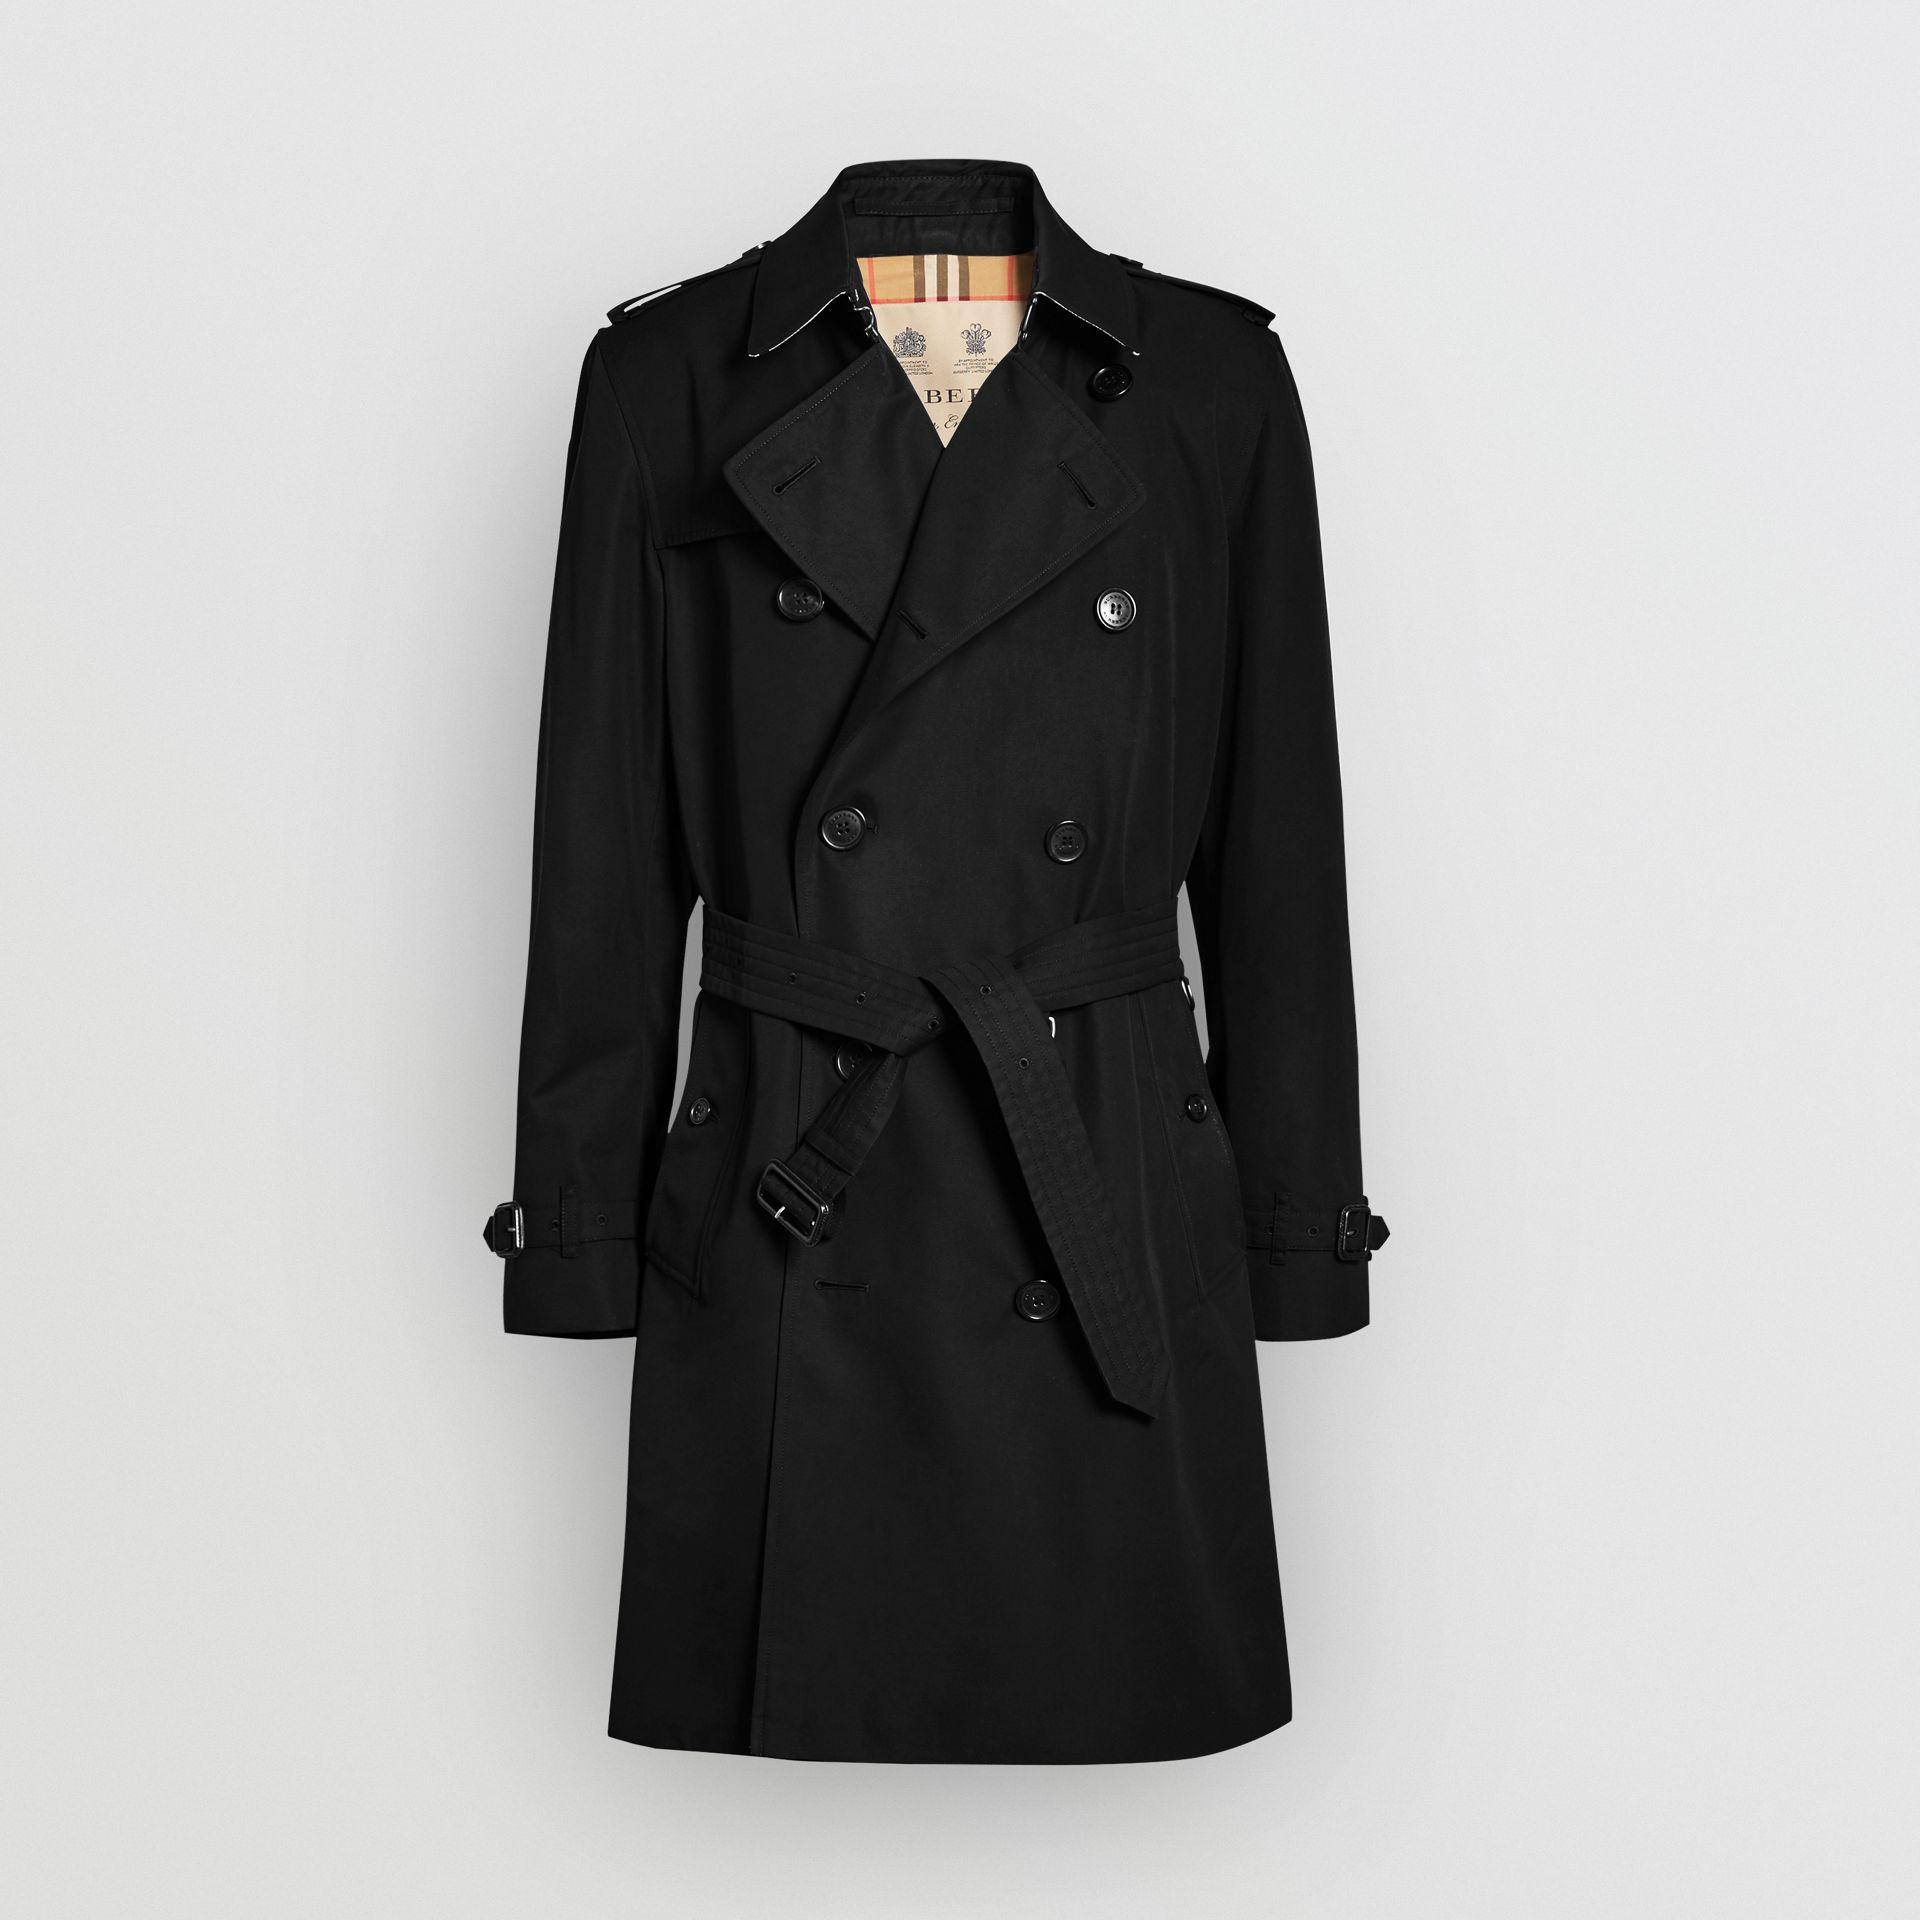 Burberry The Kensington Heritage Trench Coat in Black for Men - Lyst